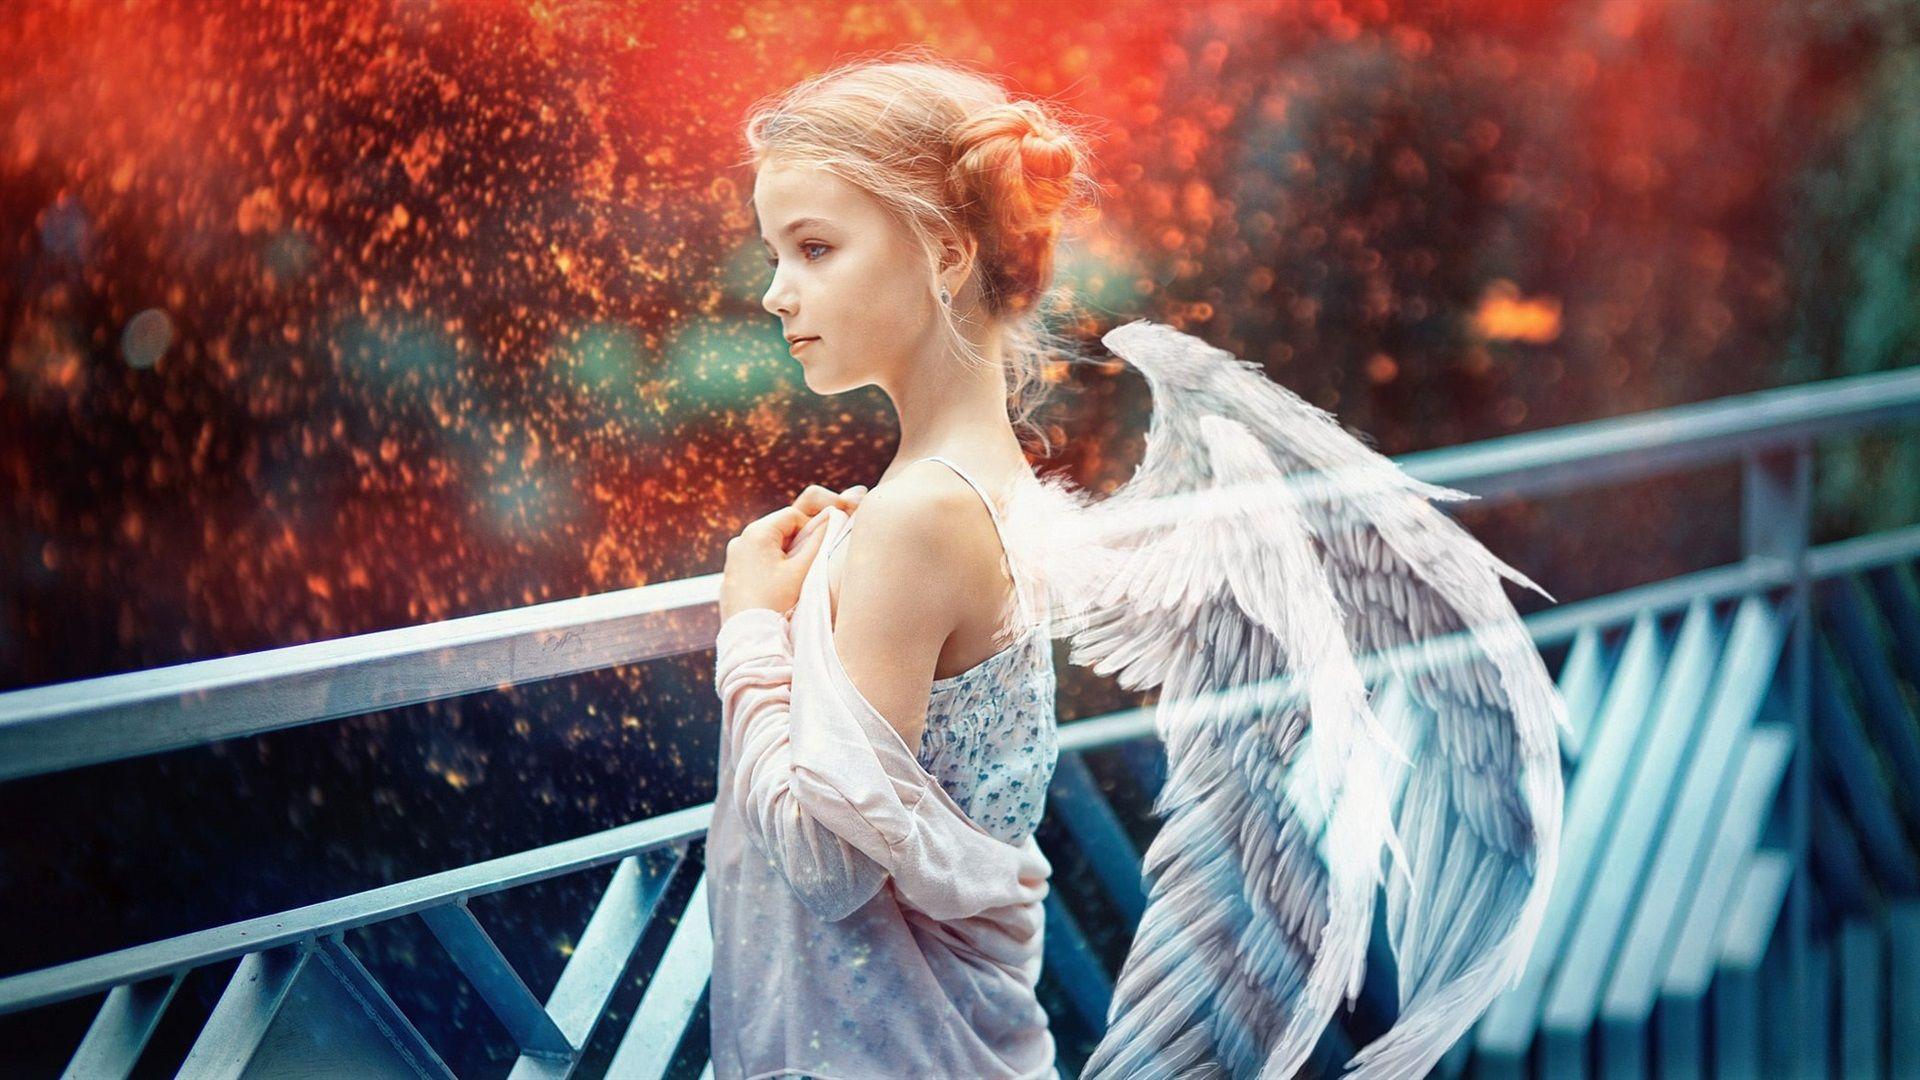 Beautiful Angel Girl Wallpapers Top Free Beautiful Angel Girl Backgrounds Wallpaperaccess 5020